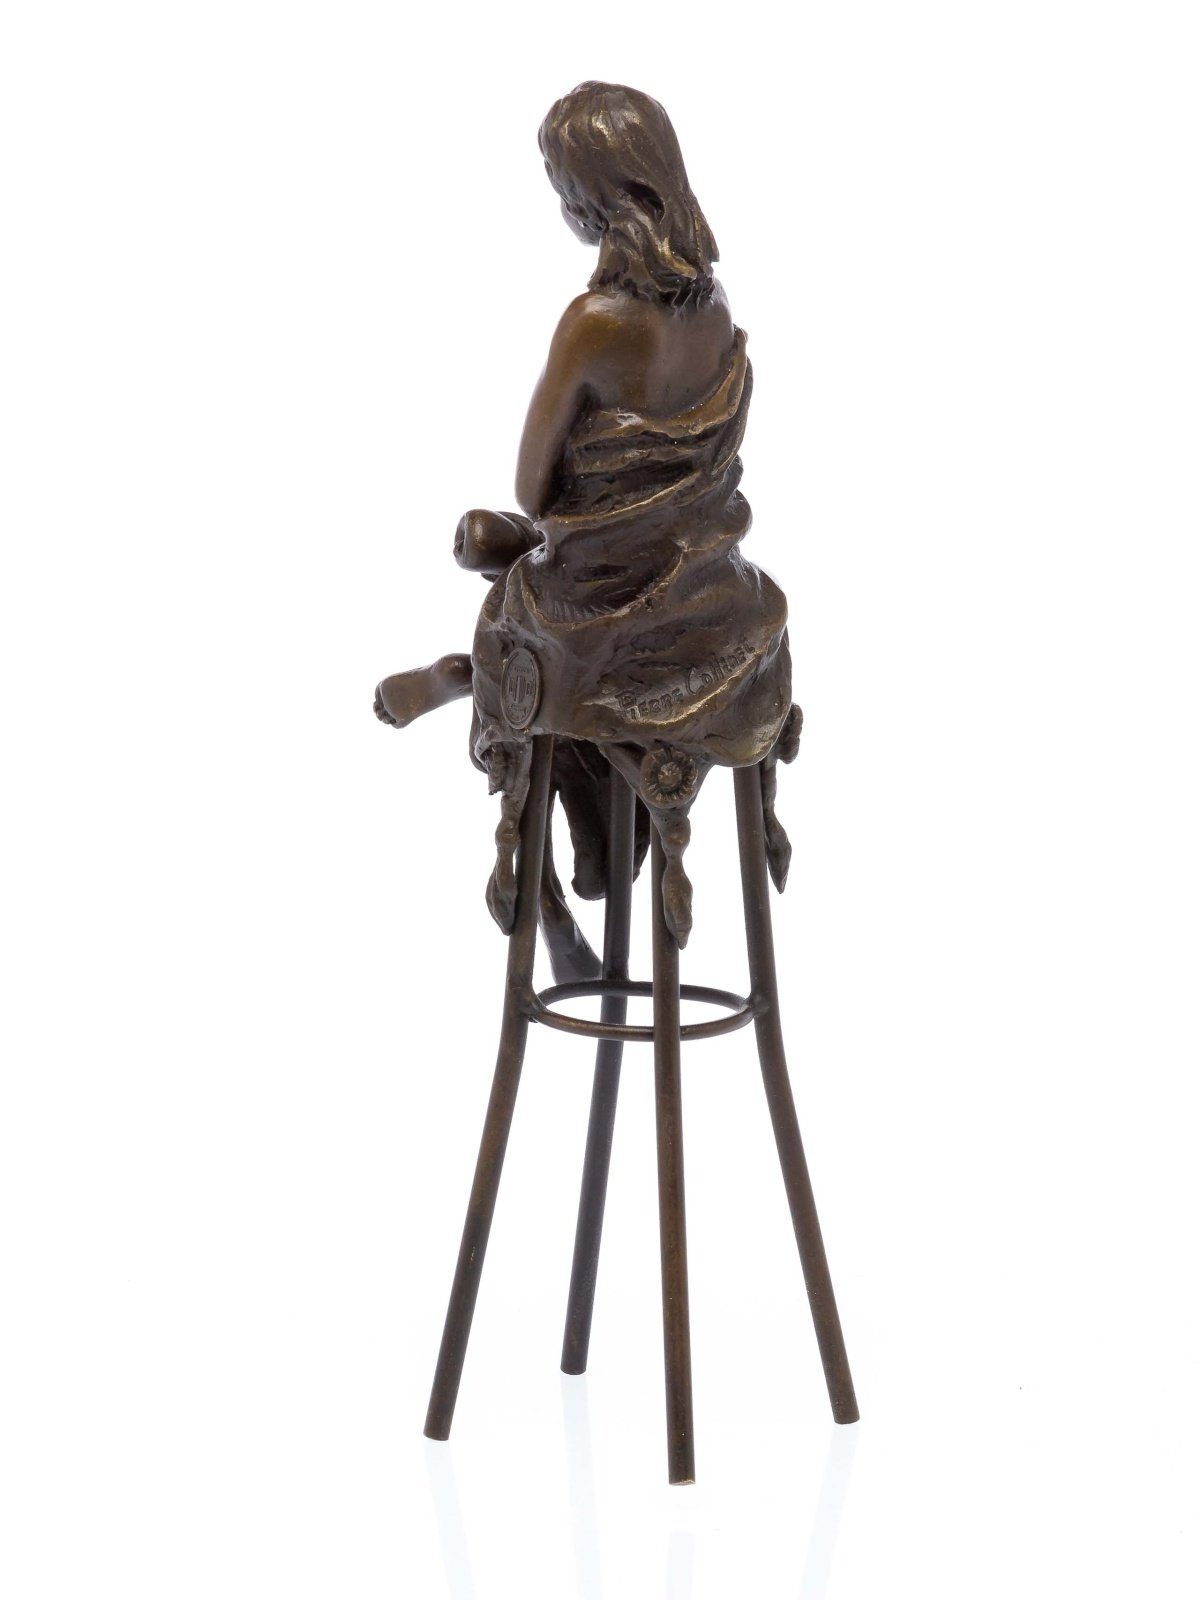 Aubaho Skulptur Figur Frau erotische Bronze Skulptur Kunst an Sculpture Bronzeskulptur